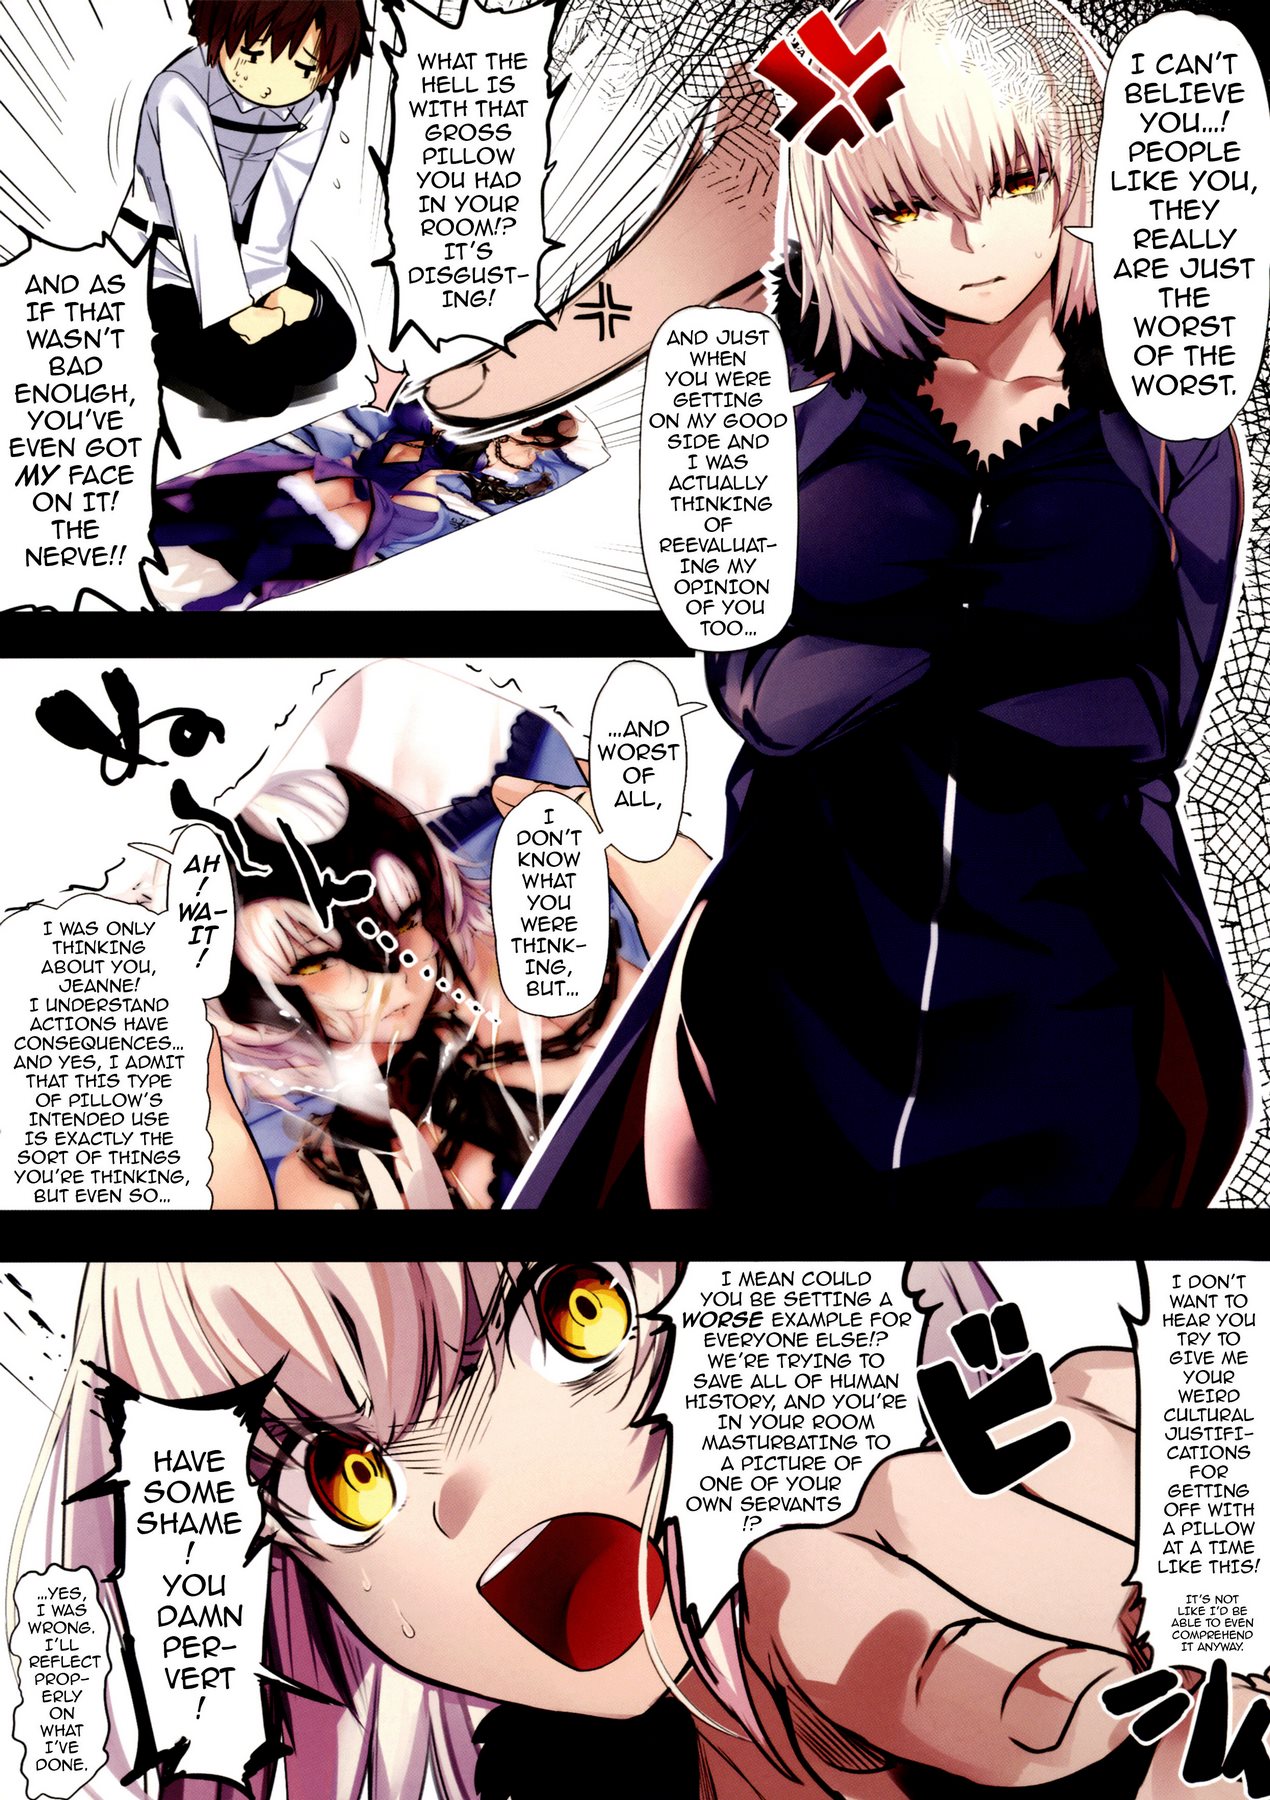 Jeanne alter porn comic